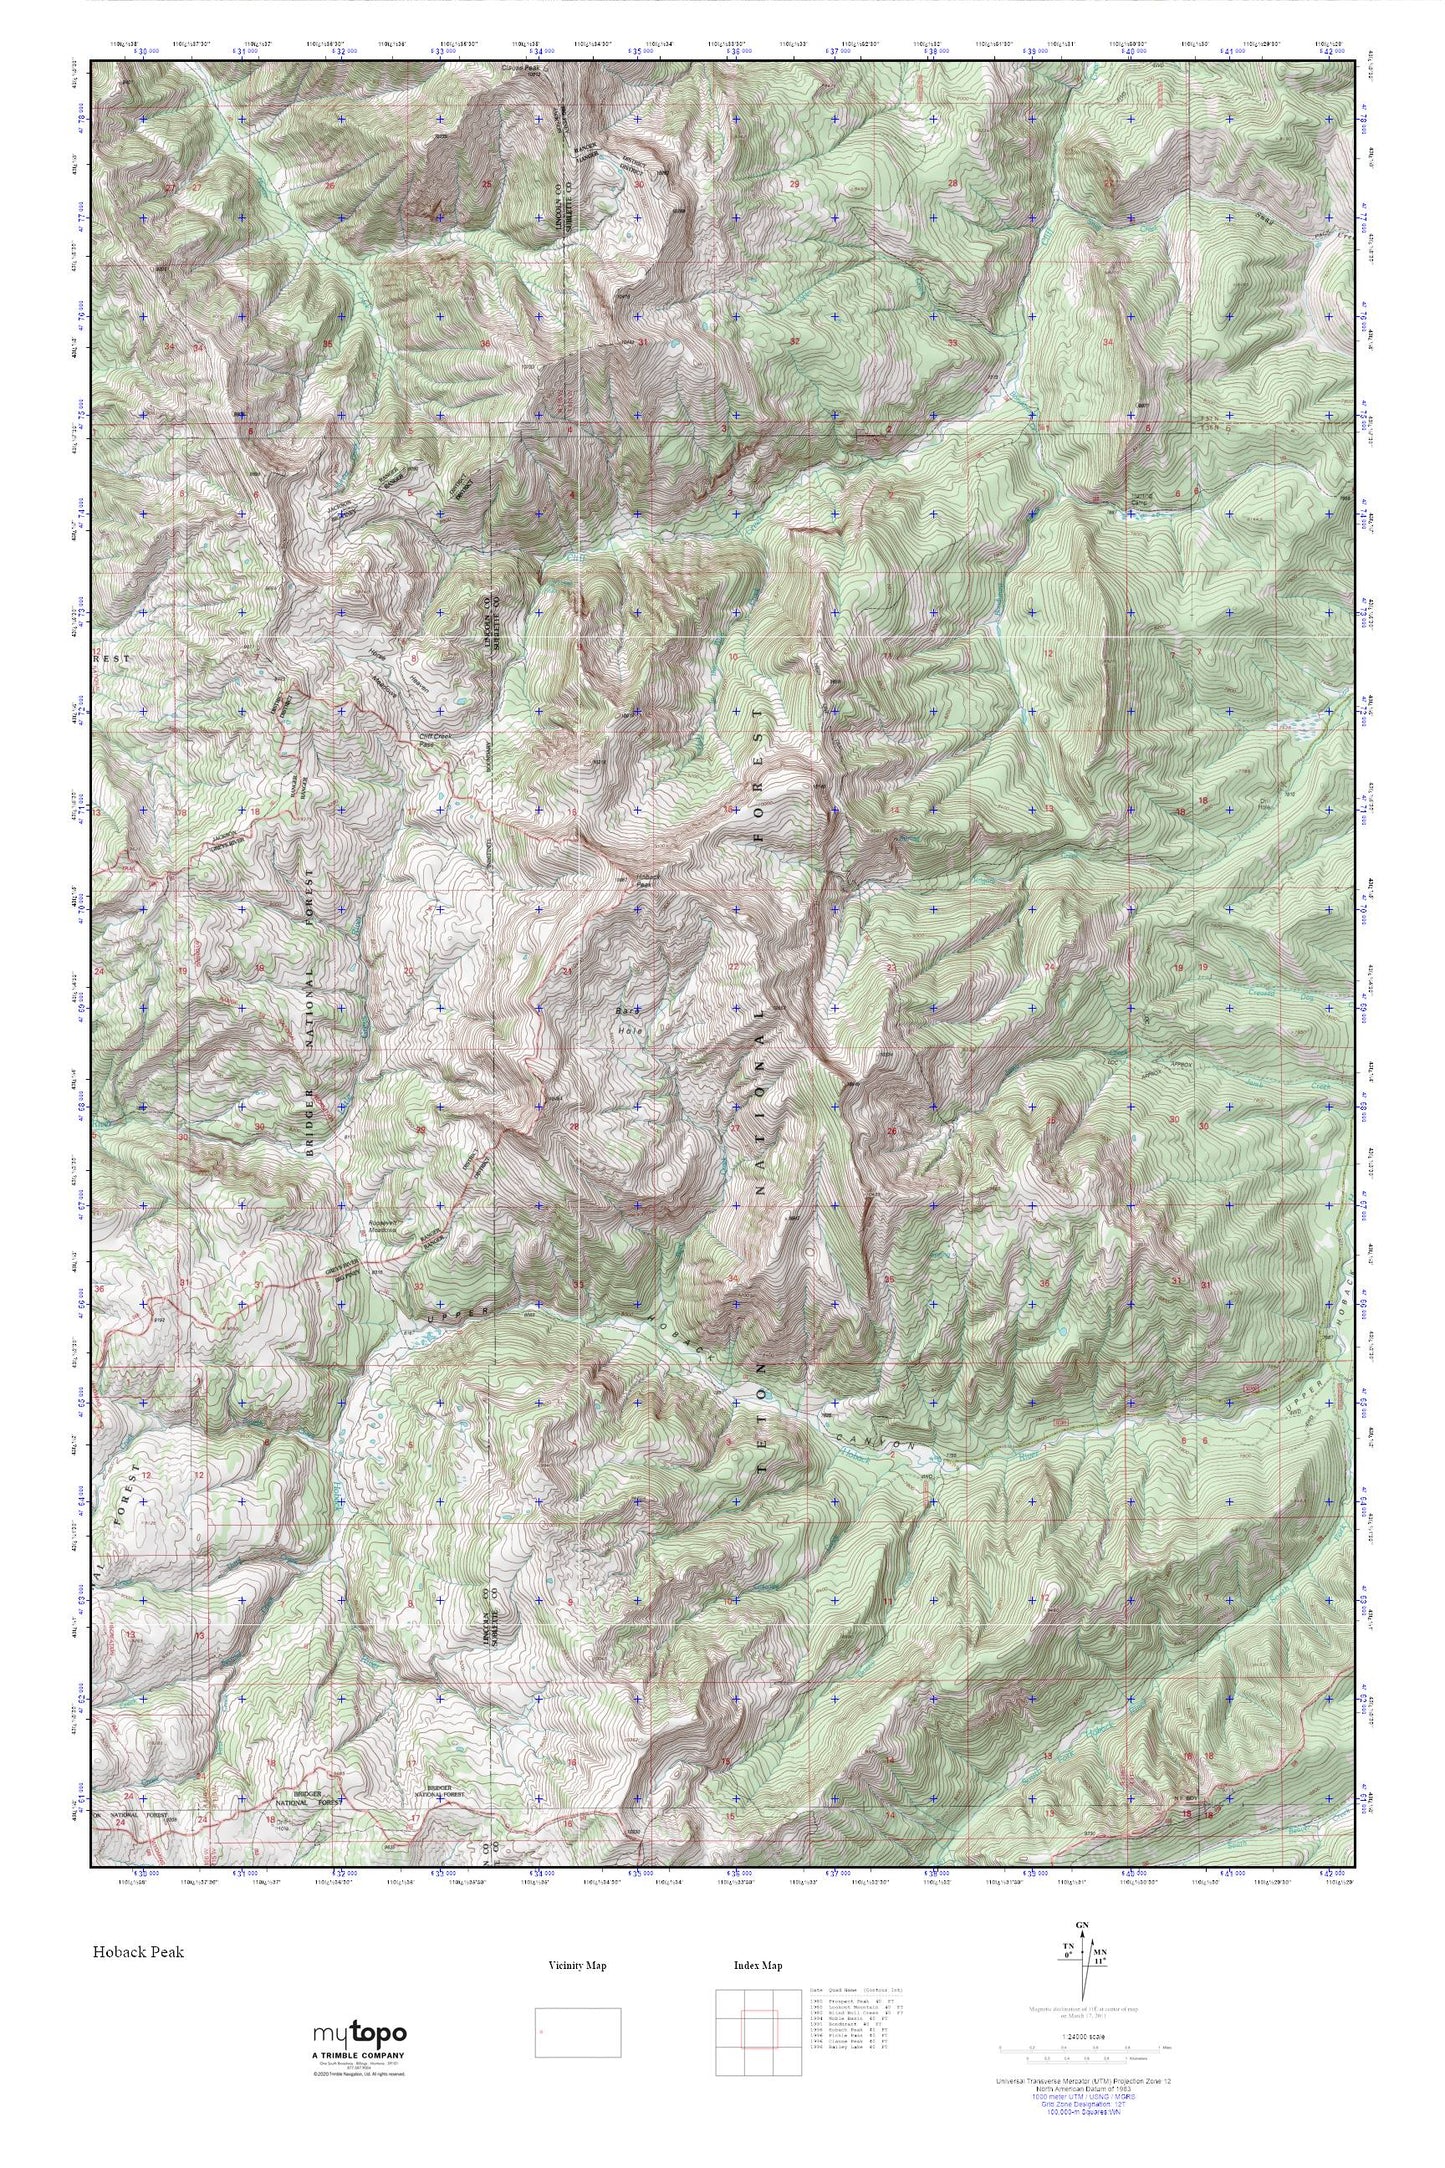 Hoback Peak MyTopo Explorer Series Map Image